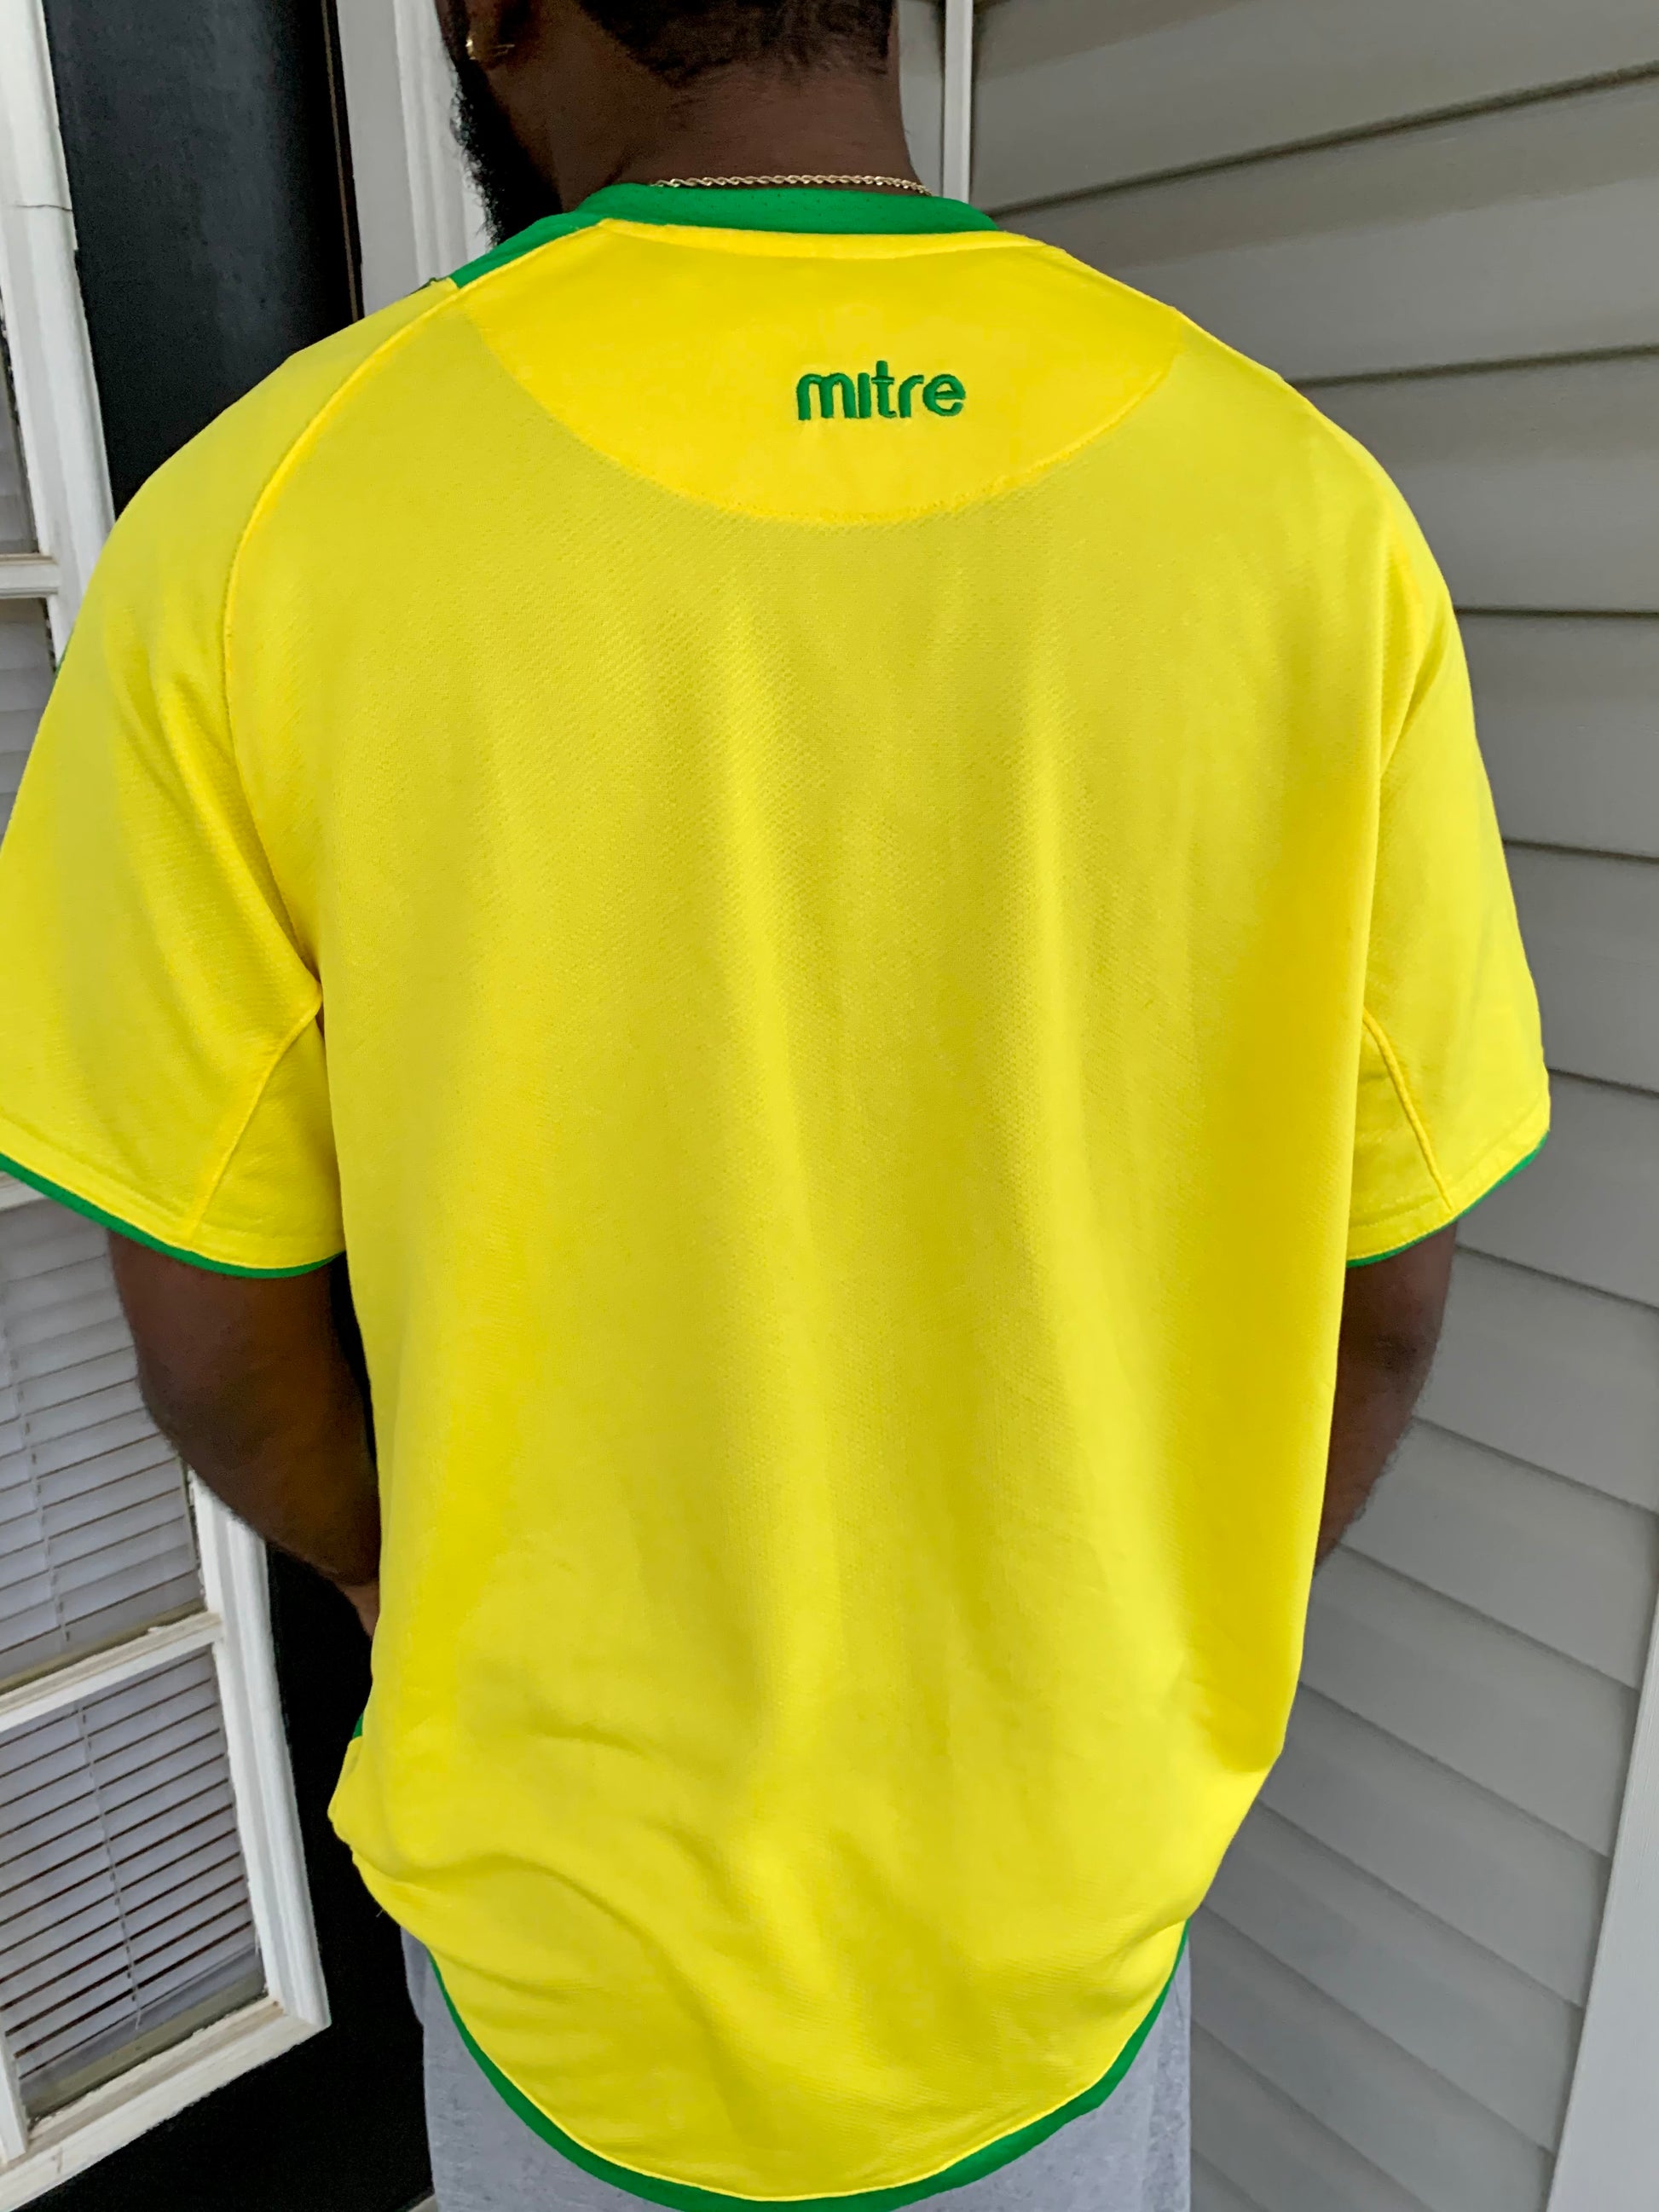 Amplify Shorts - Football Kit from Mitre